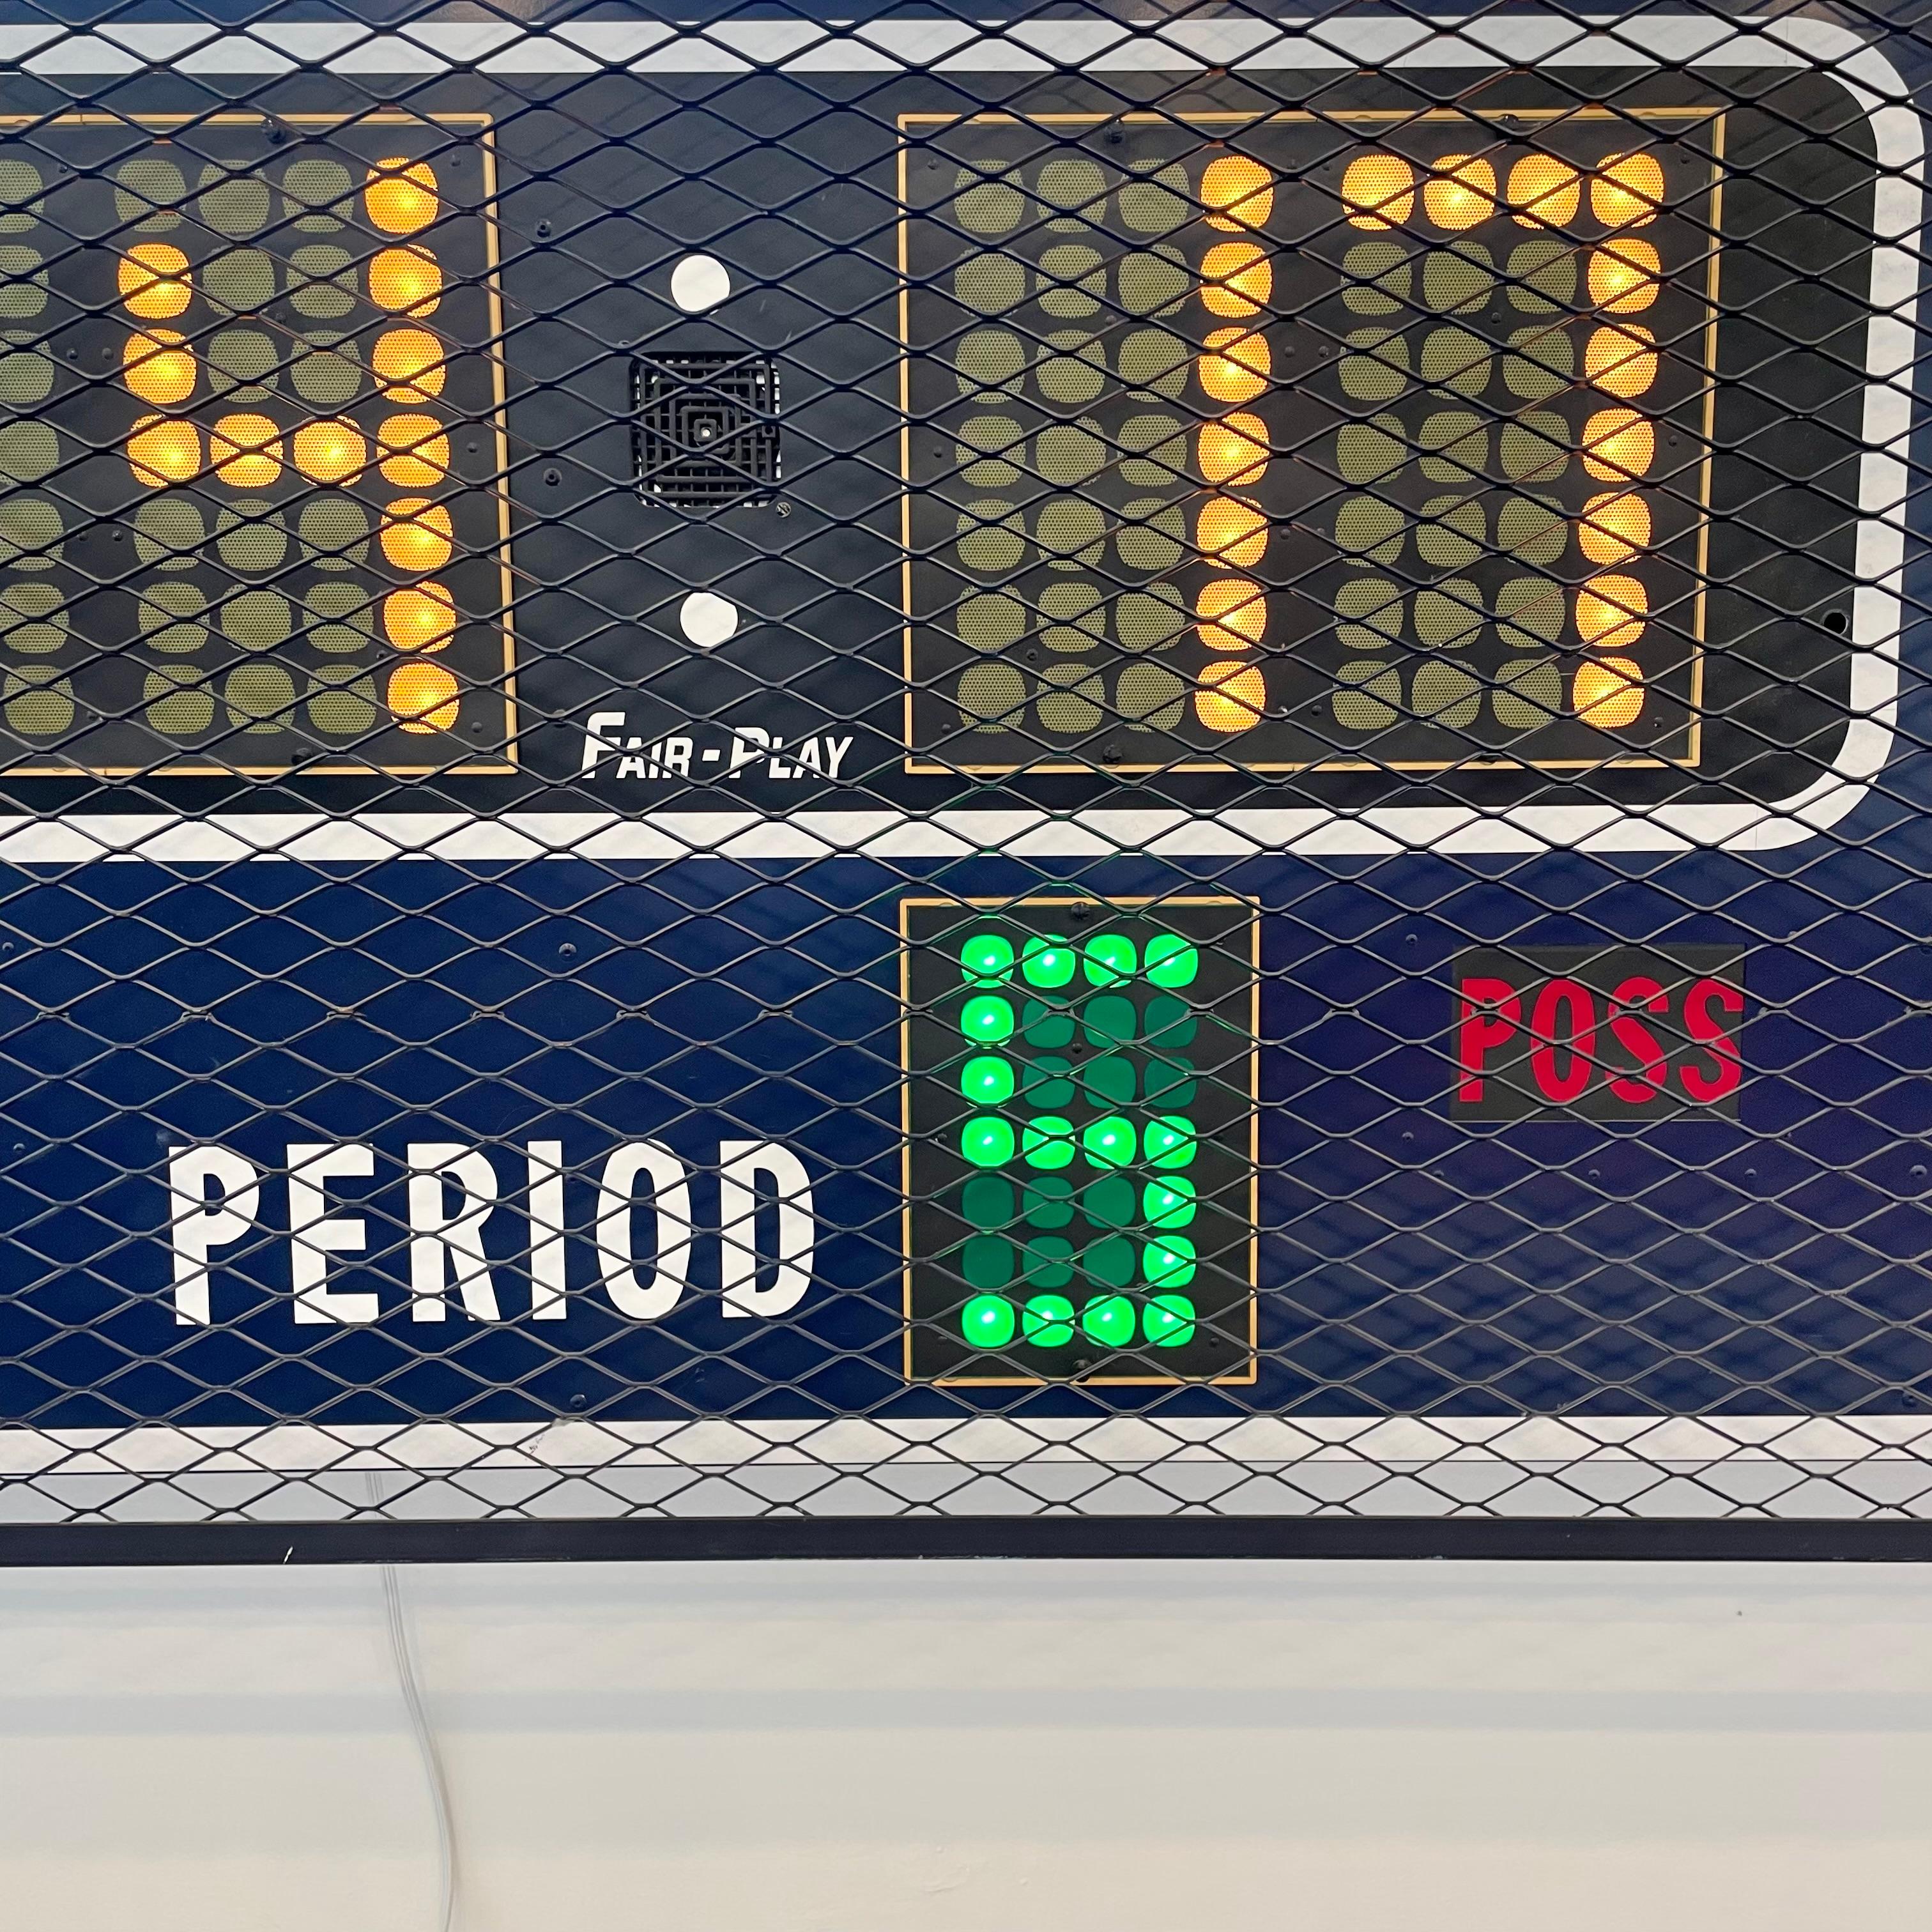 9 Foot Encaged Fair Play Basketball Scoreboard, 1980s USA 5